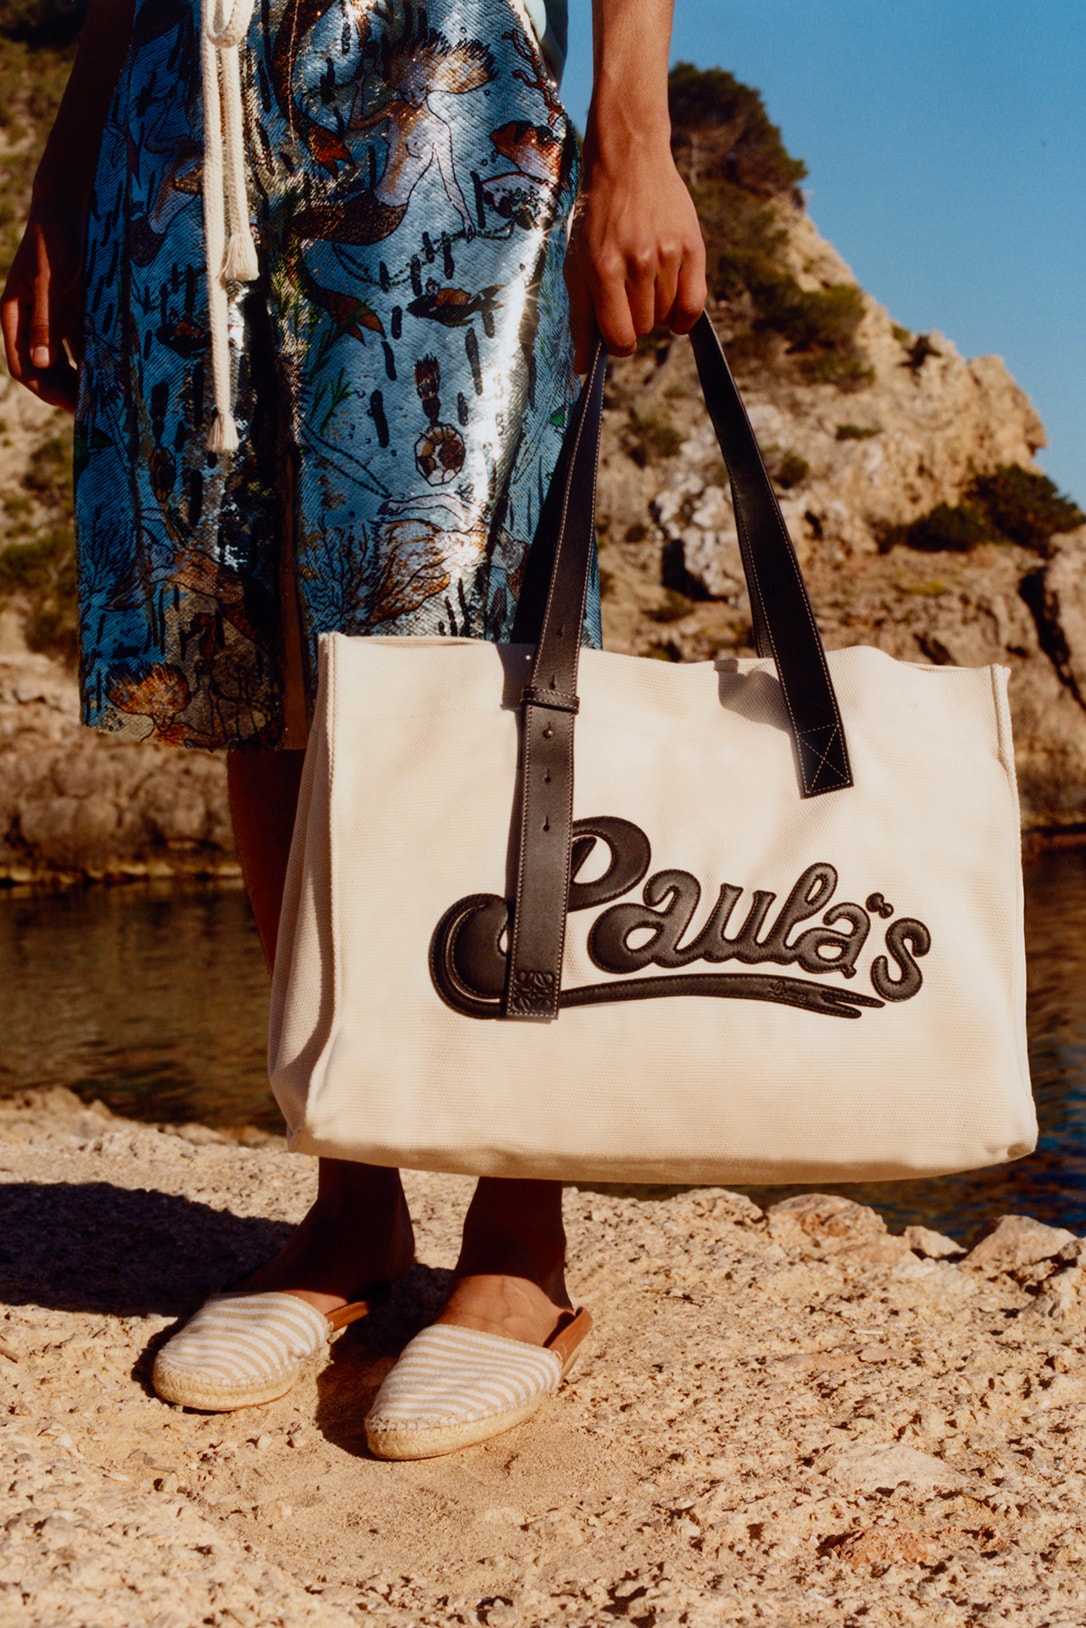 LOEWE Paula's Ibiza Close to Paradise Video Short Film Lookbook Collaboration Collab HBX Spring Summer 2018